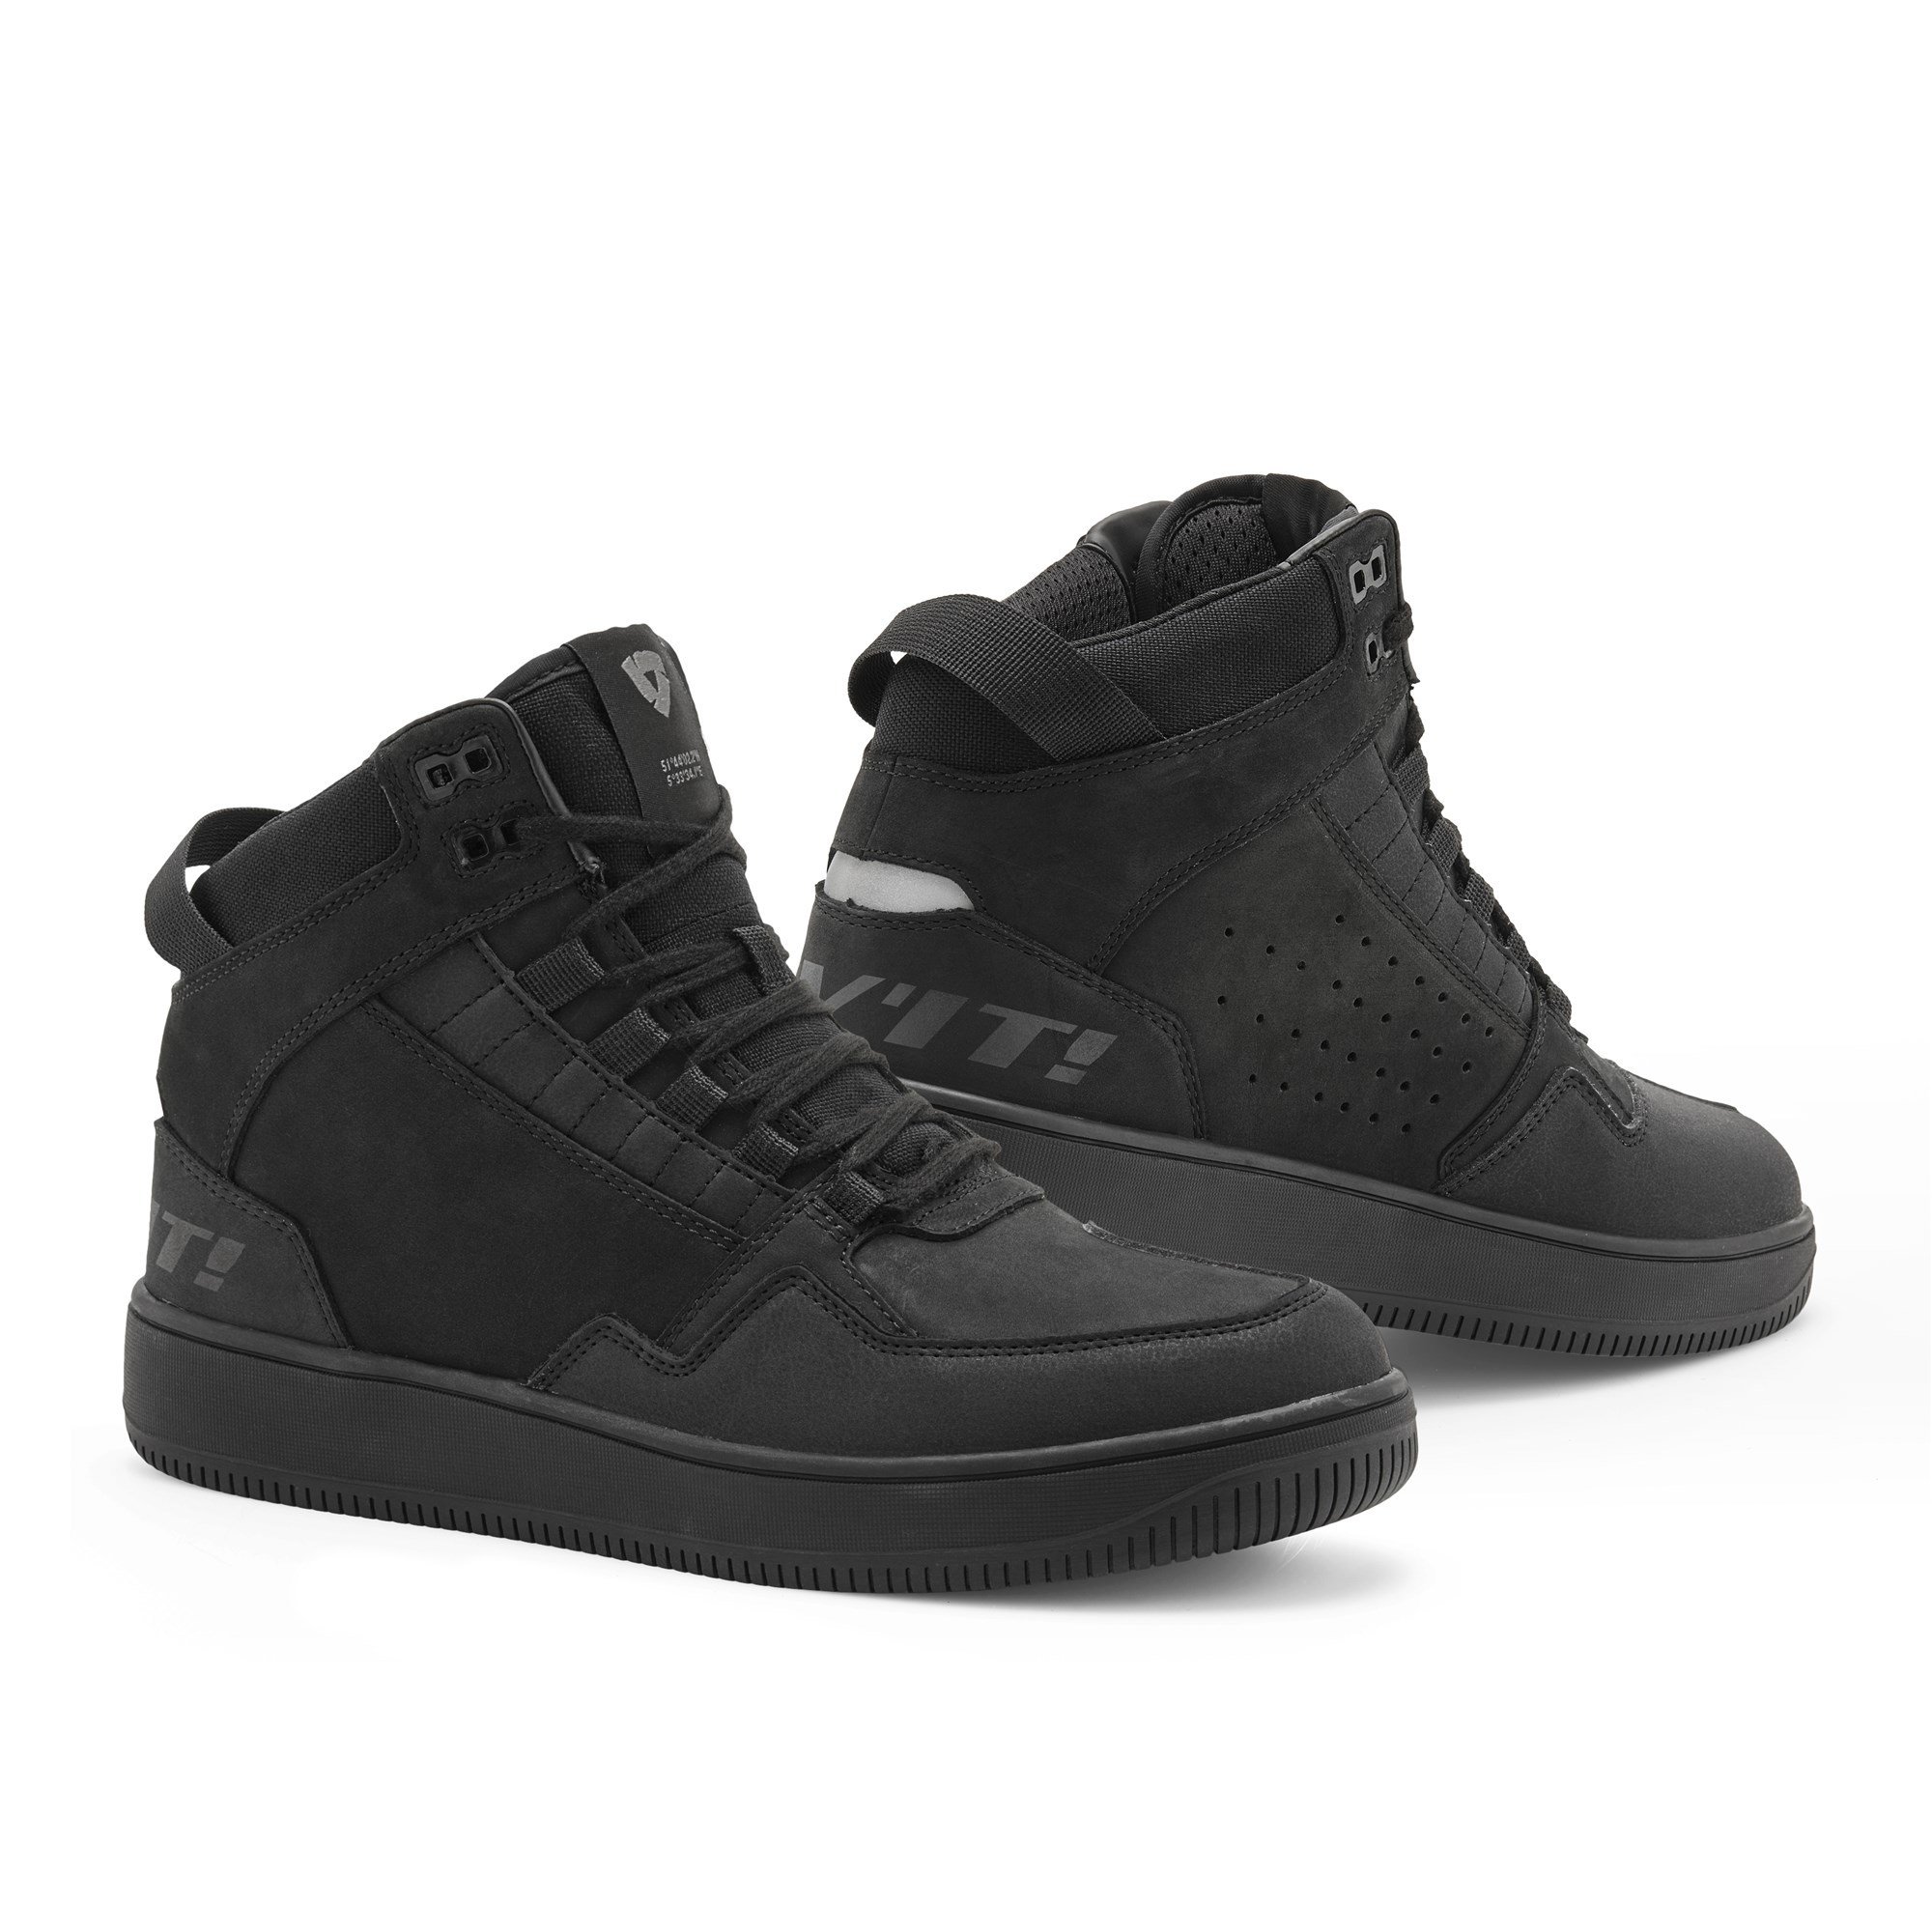 Image of REV'IT! Jefferson Shoes Black Size 47 ID 8700001282130